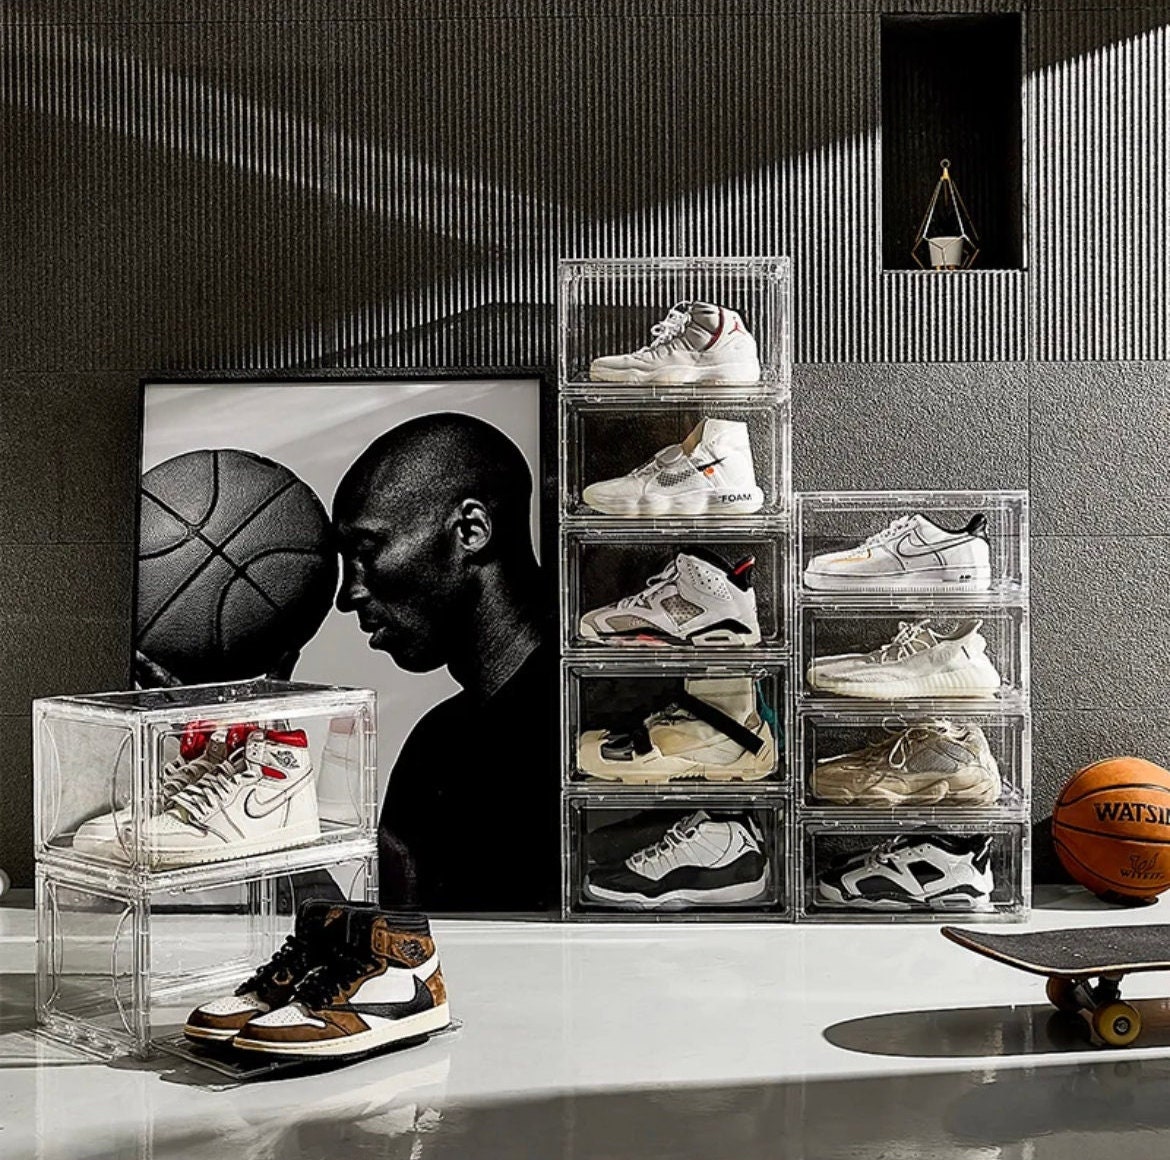 Large Capacity Transparent Side Open Shoe Box Basketball Shoes